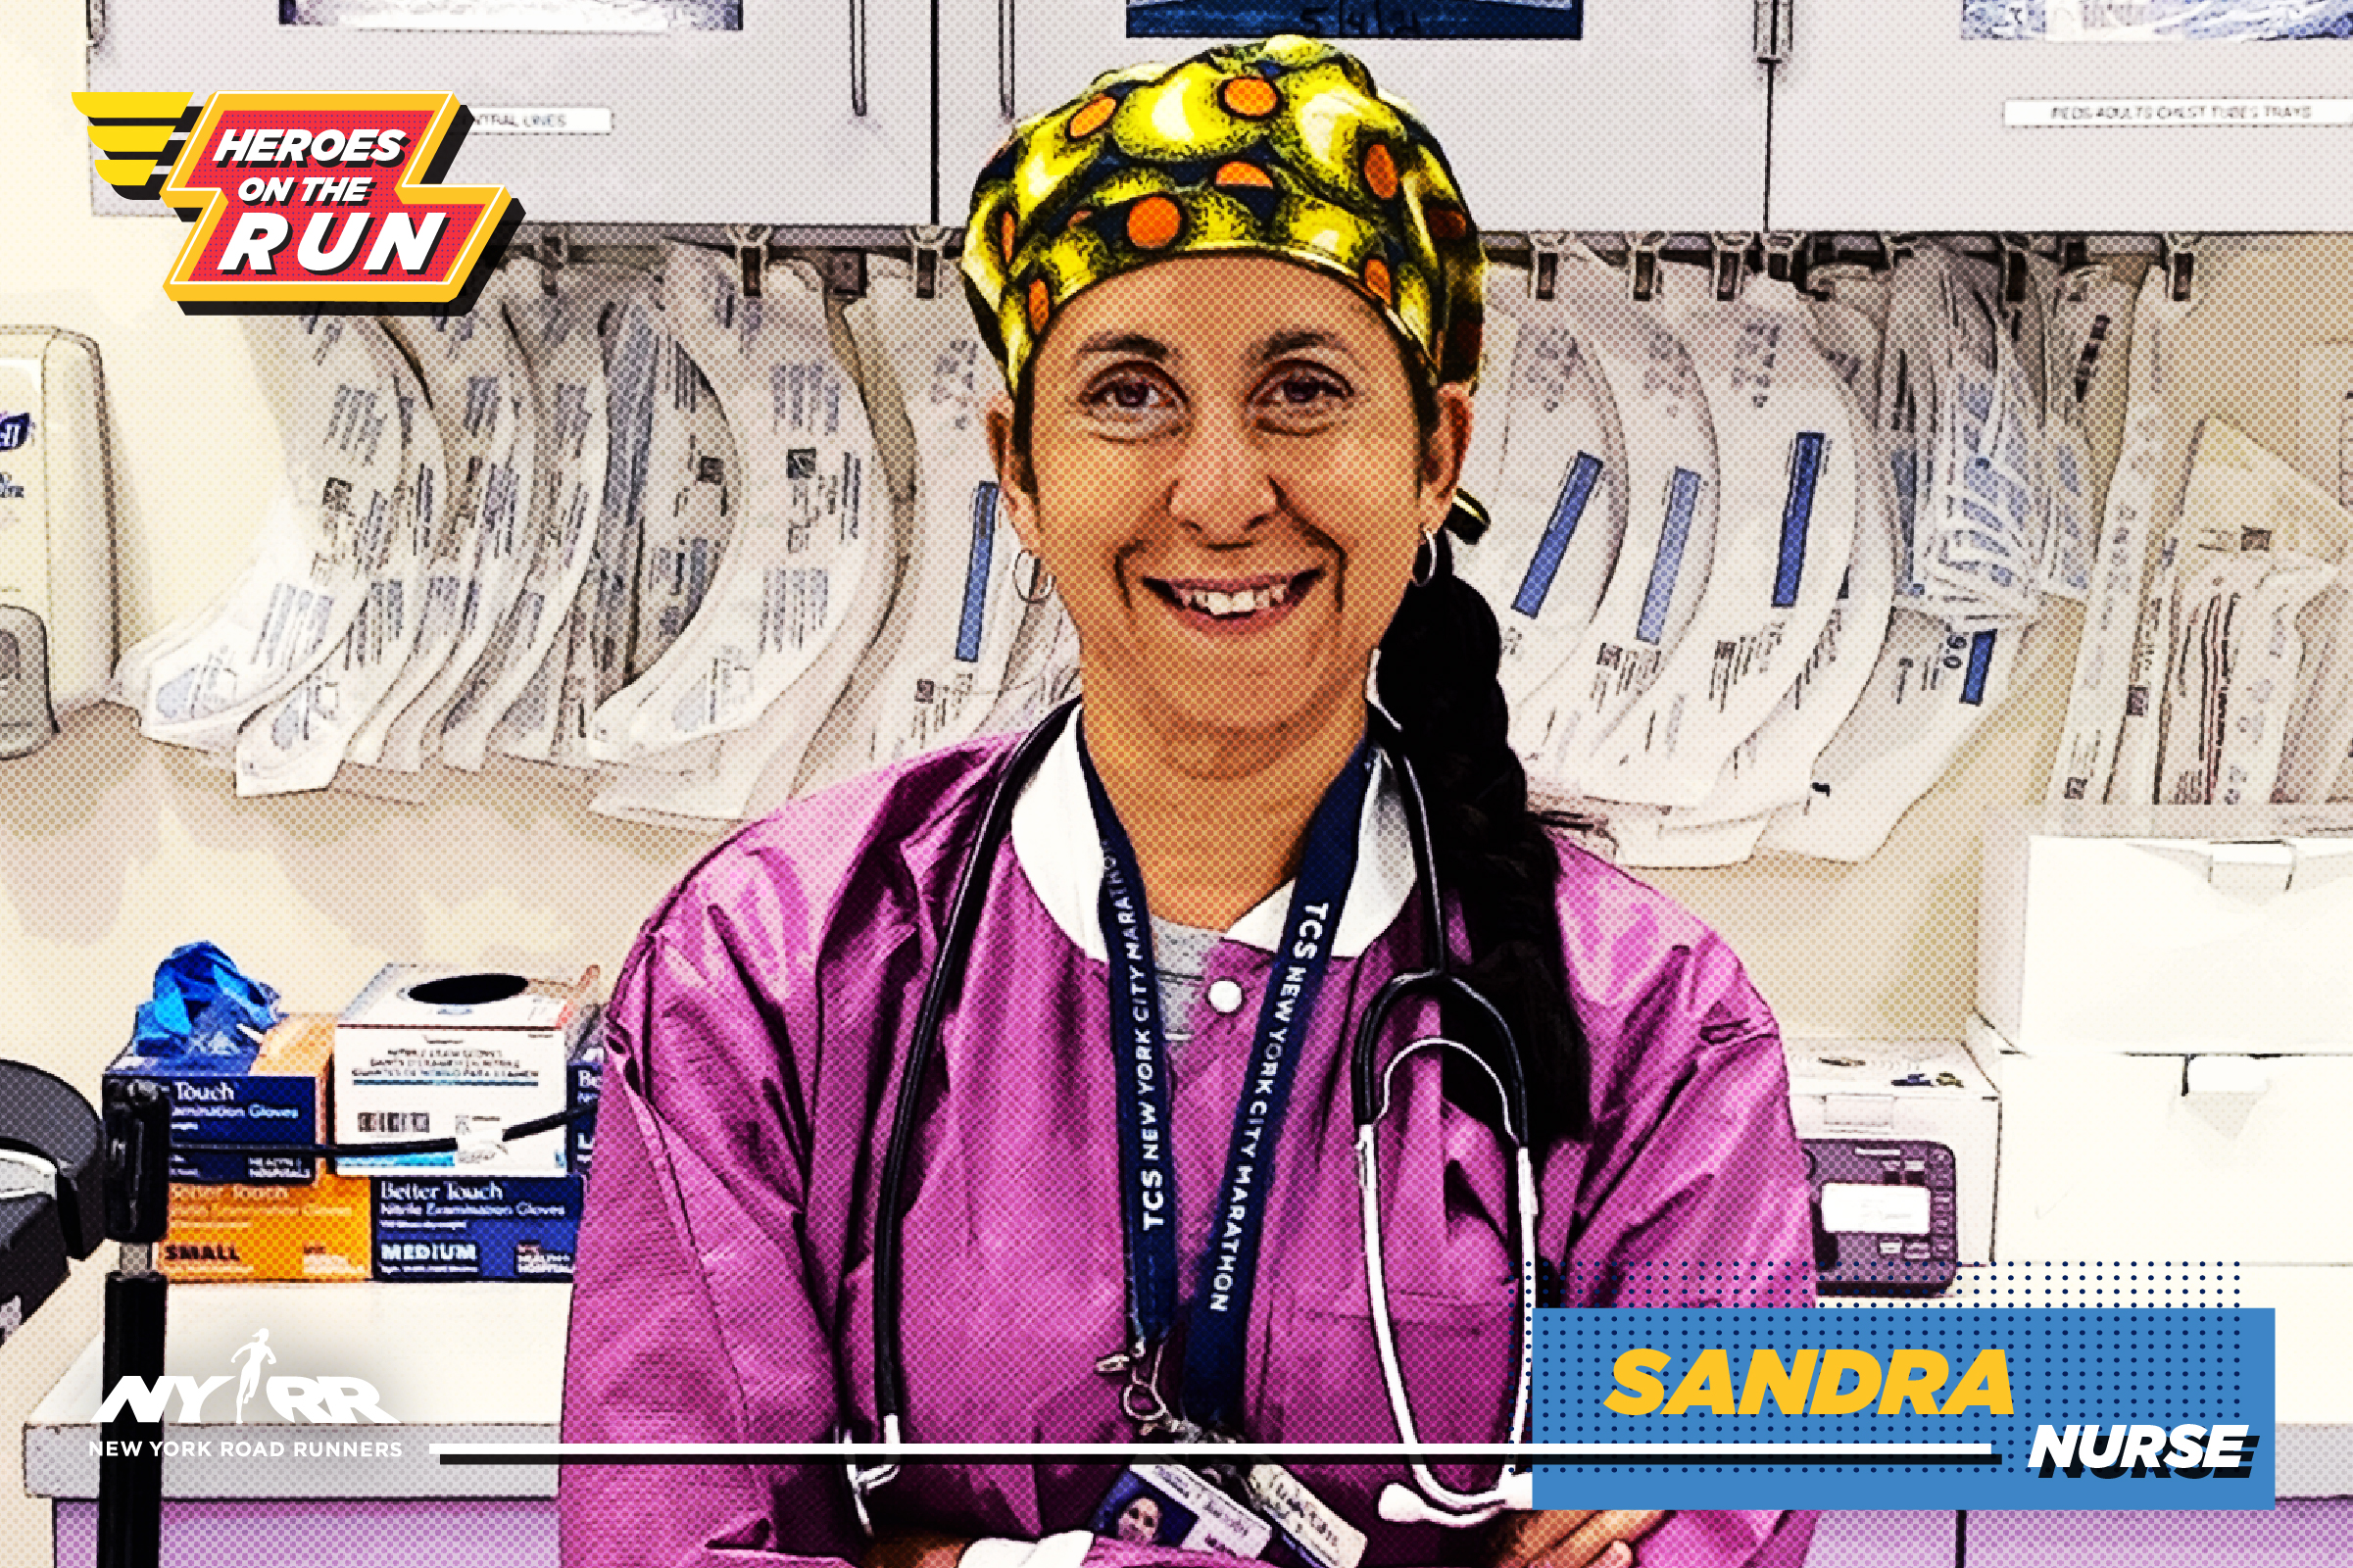 Sandra Perez nurse with Heroes on the Run text overlay